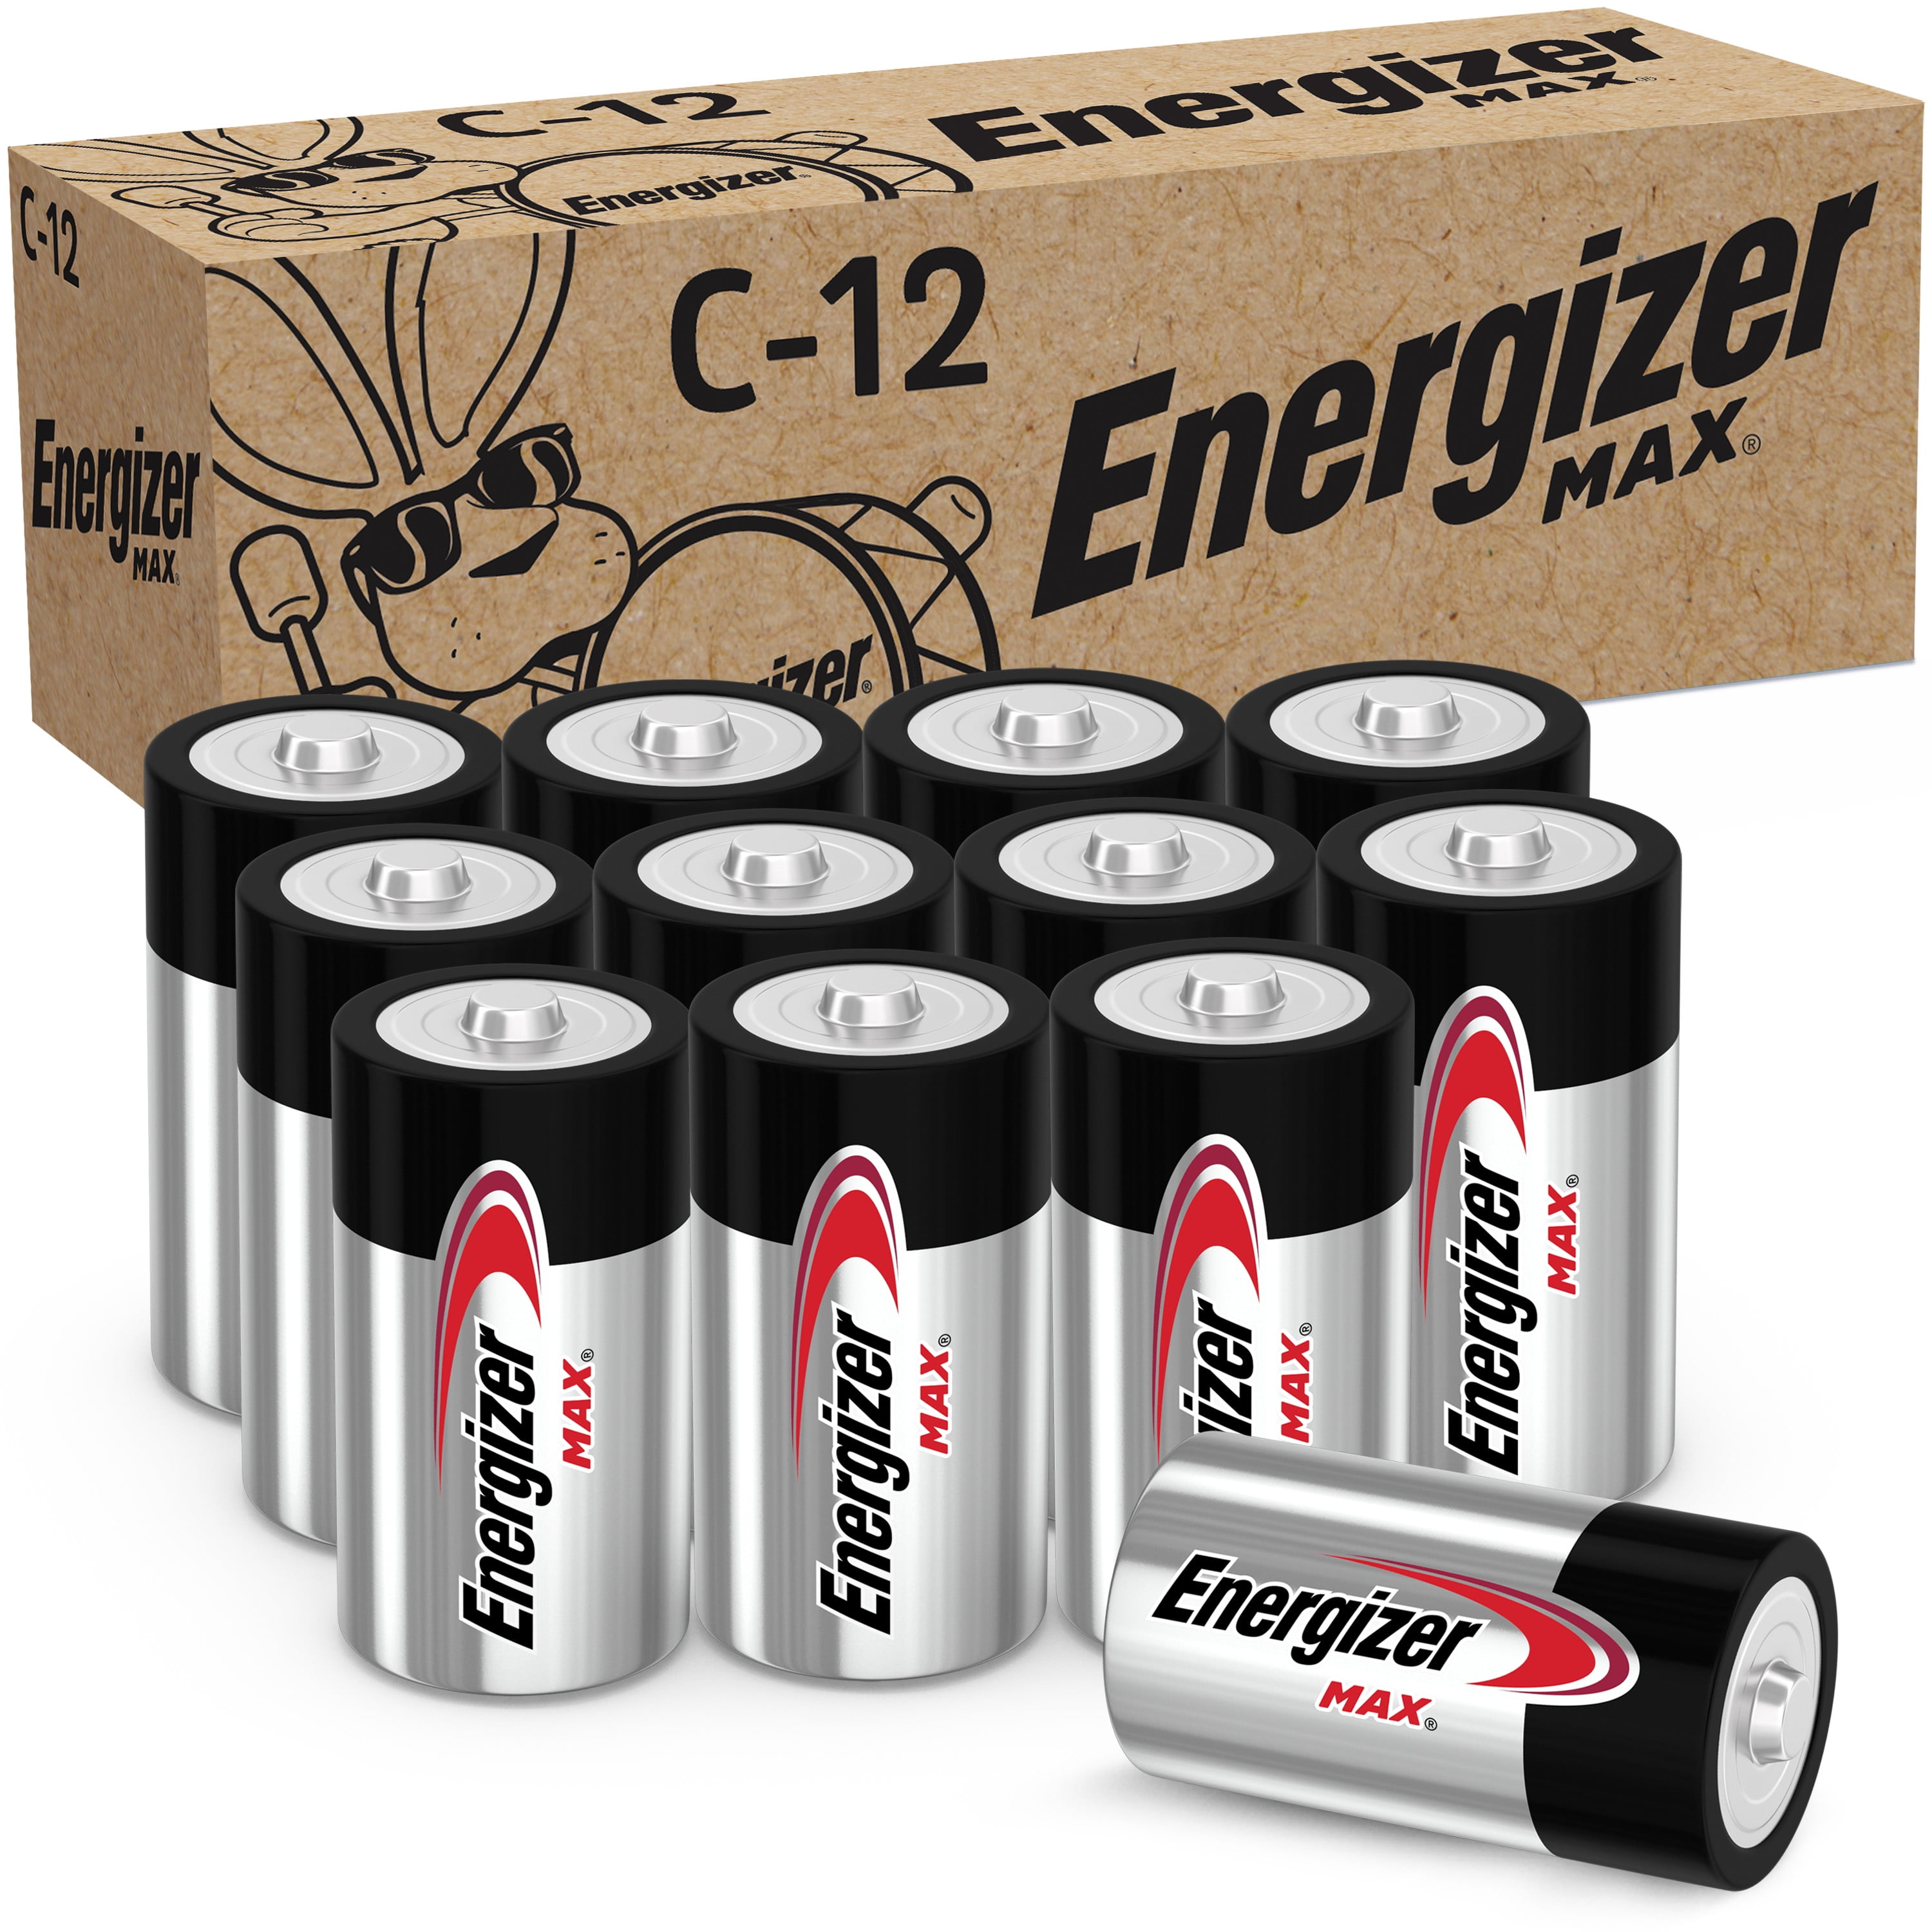 Energizer A23 Battery, 12 Volt - 2 Pack 